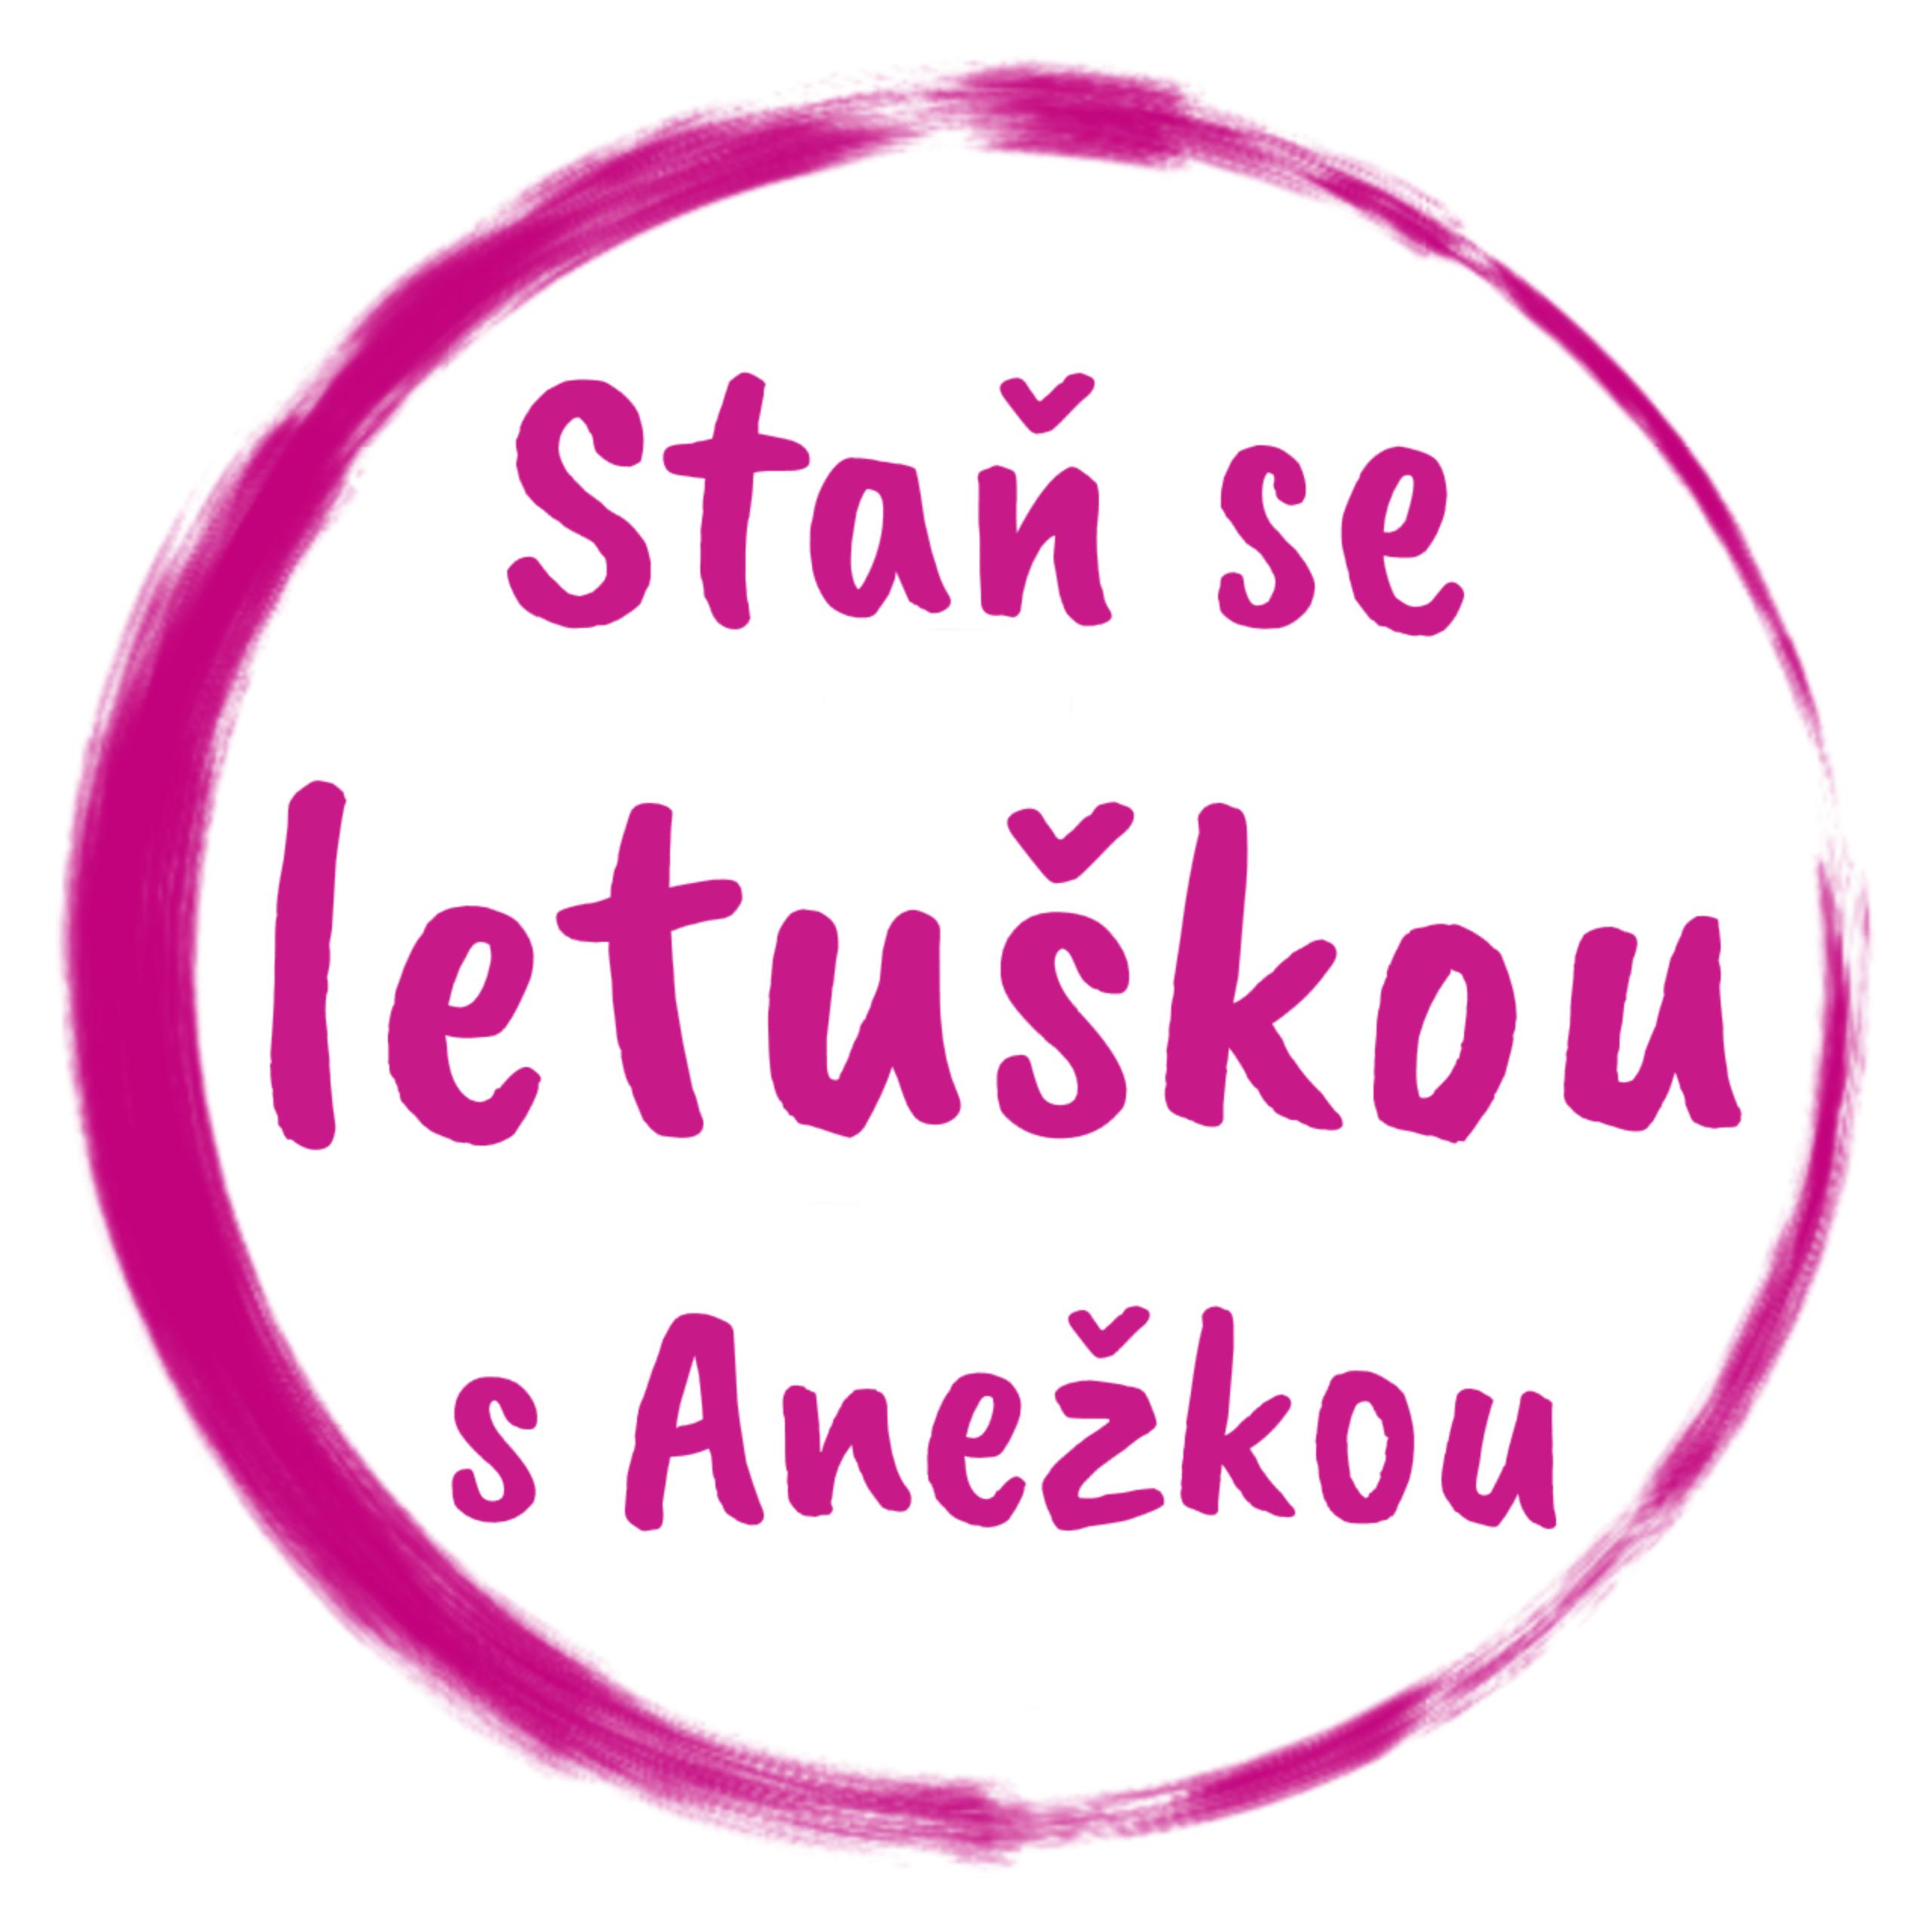 Letuskou.cz